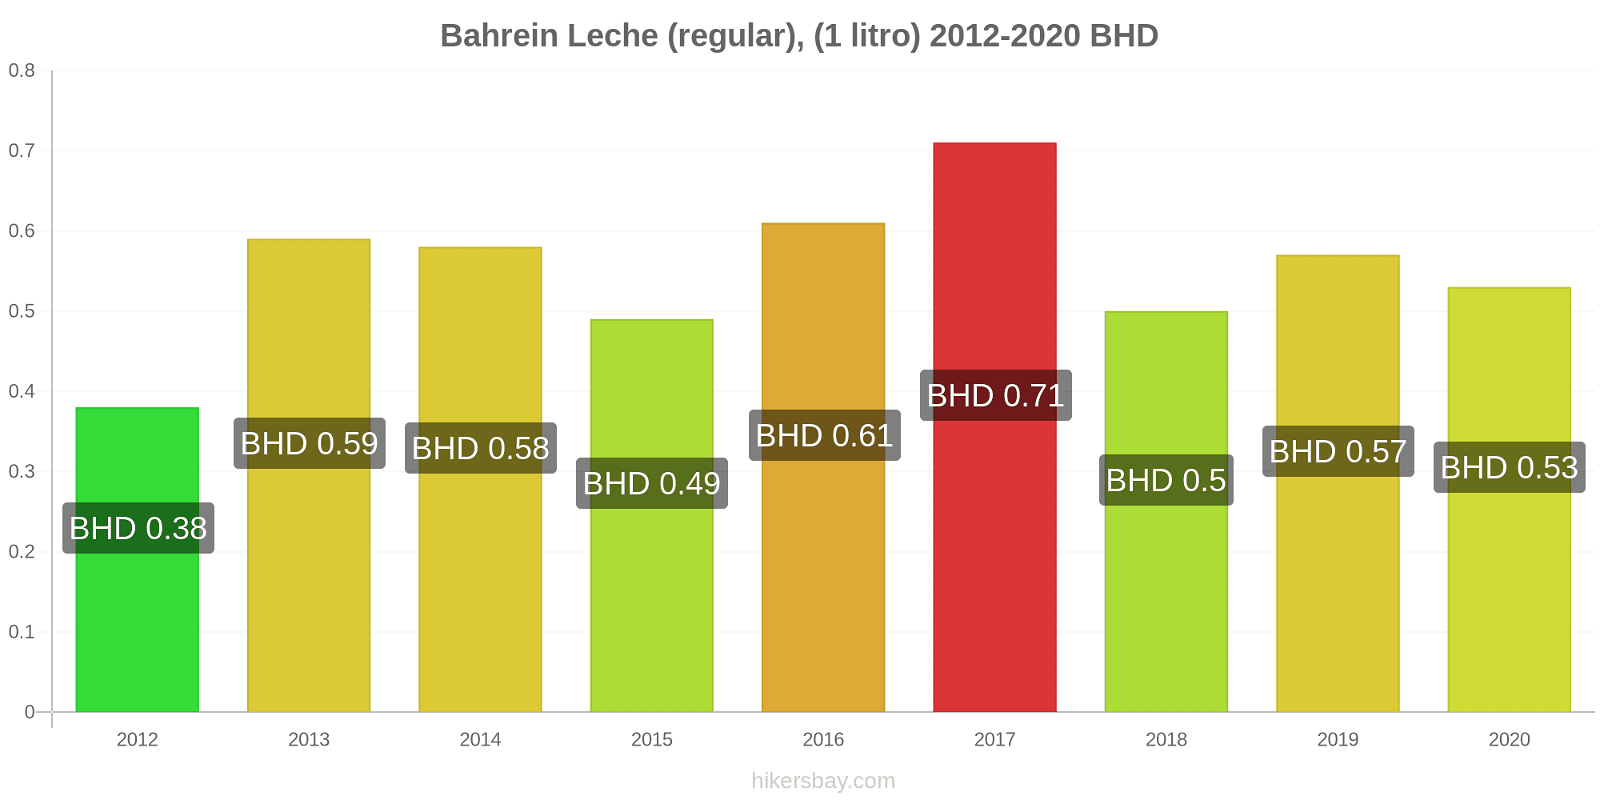 Bahrein cambios de precios Leche (Regular), (1 litro) hikersbay.com